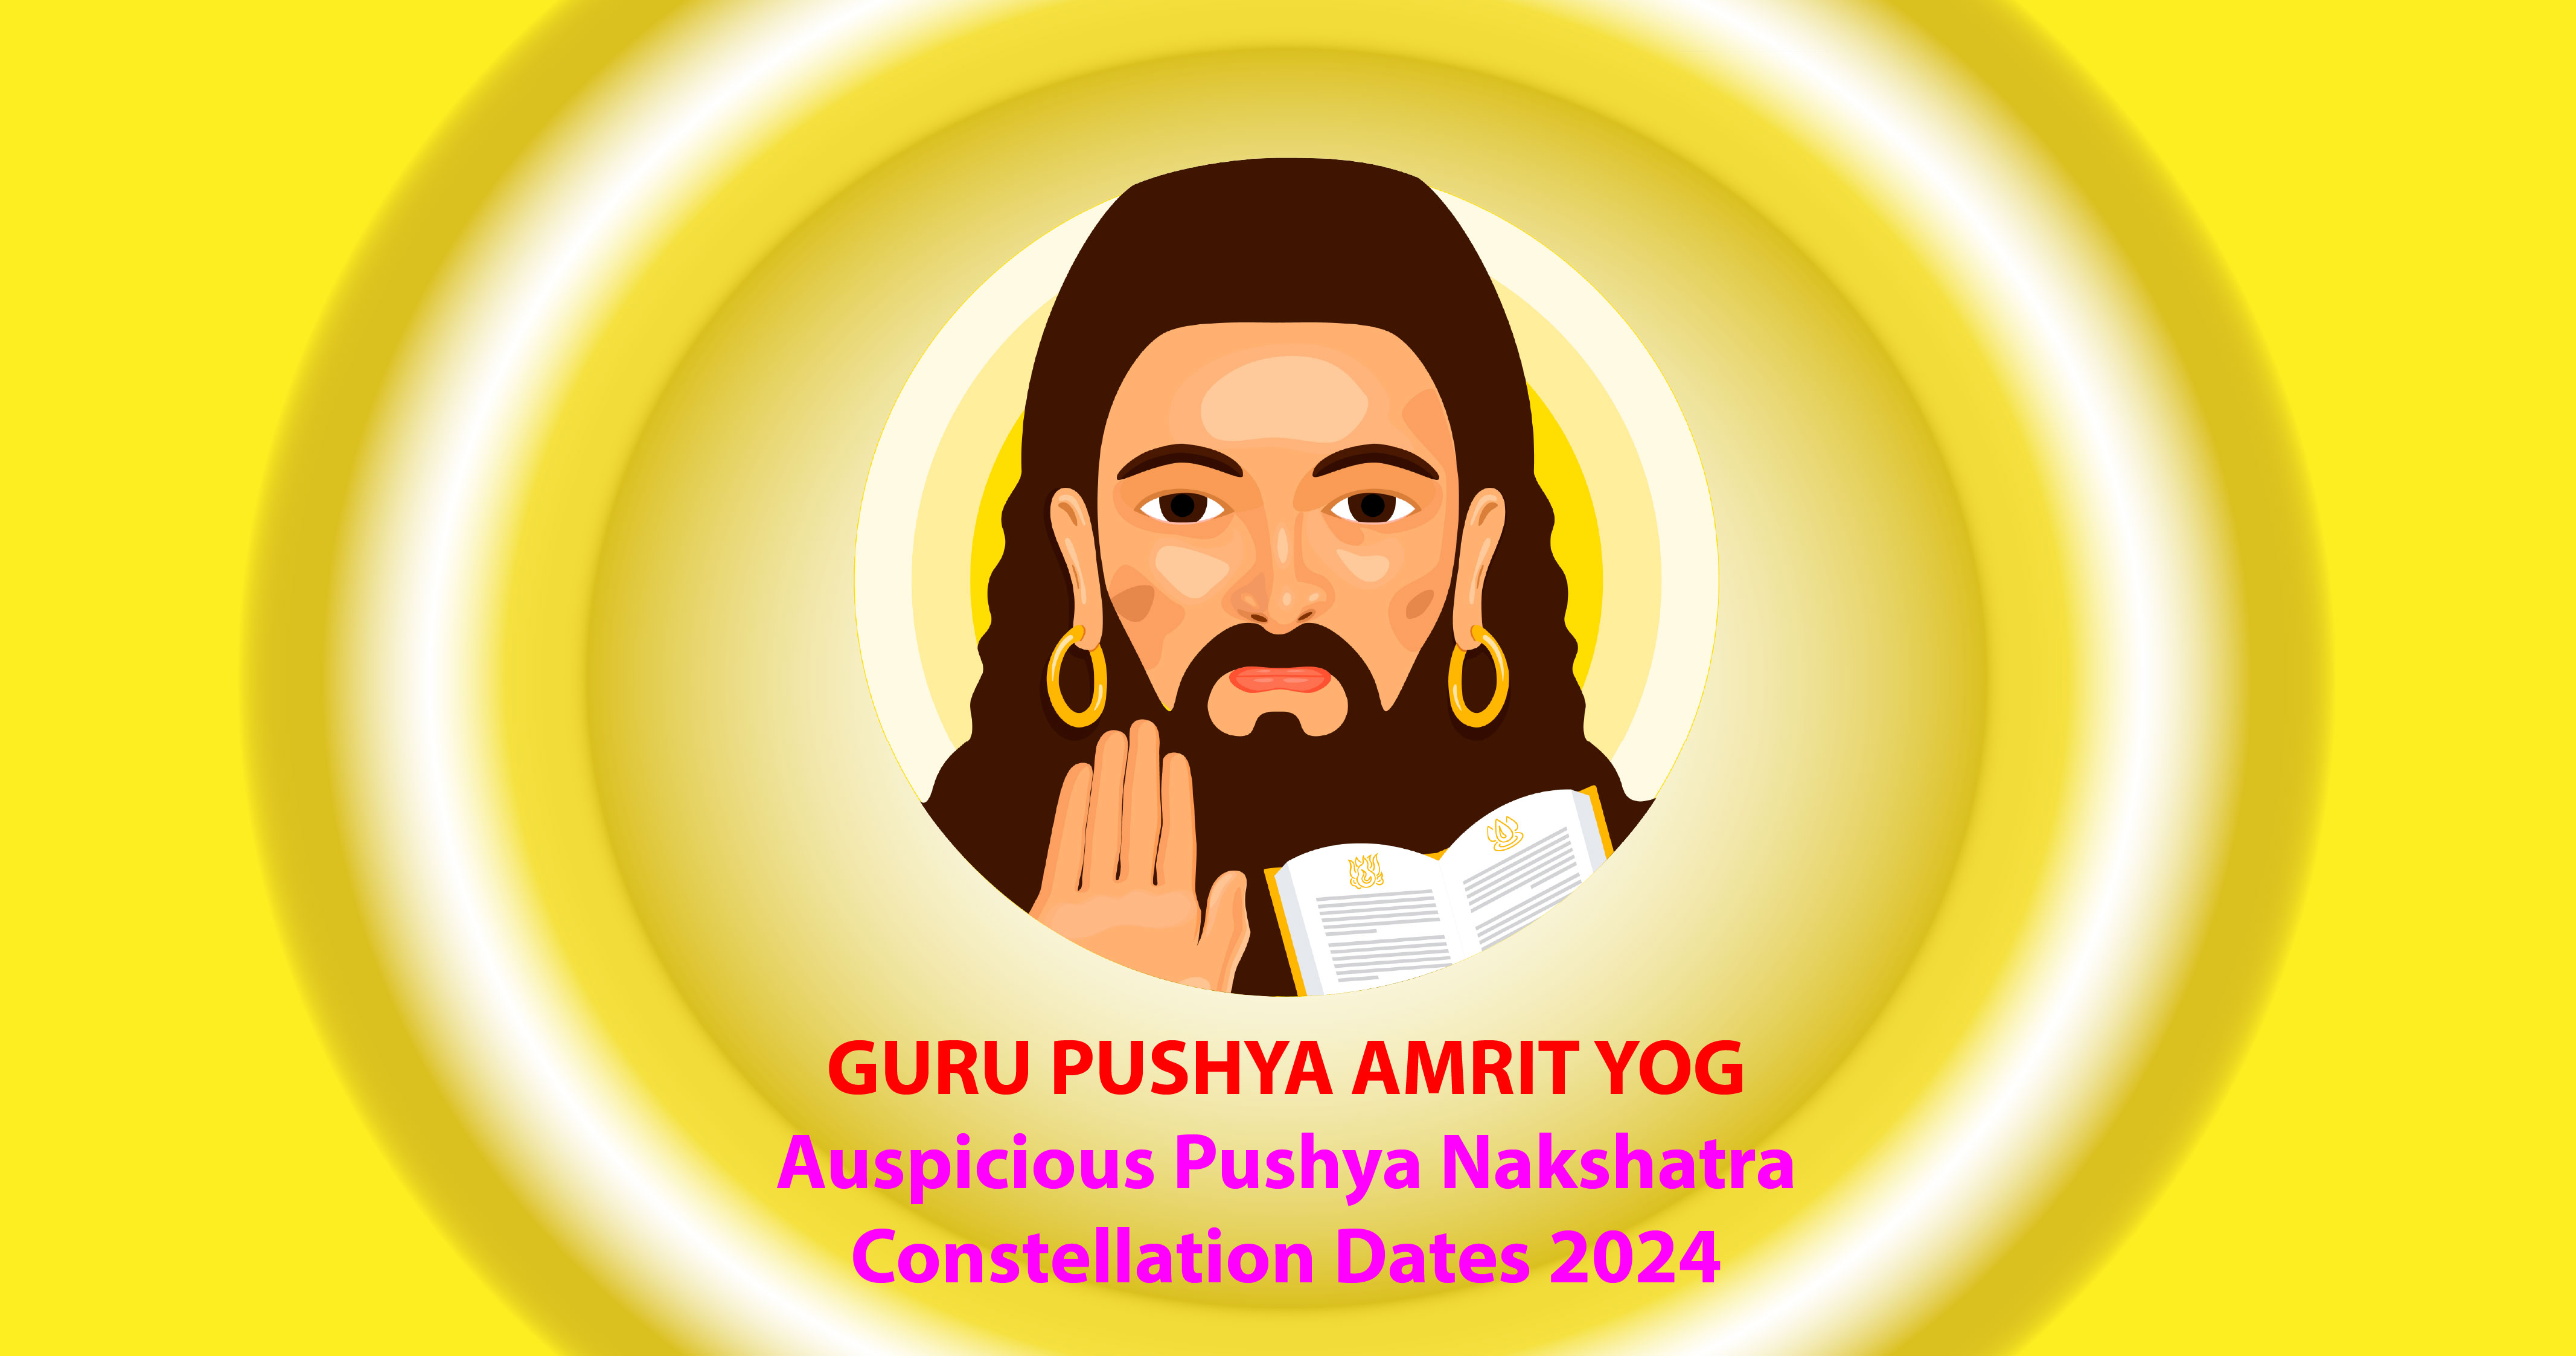 GURU PUSHYA YOGA Auspicious Pushya Nakshatra Constellation Dates 2024